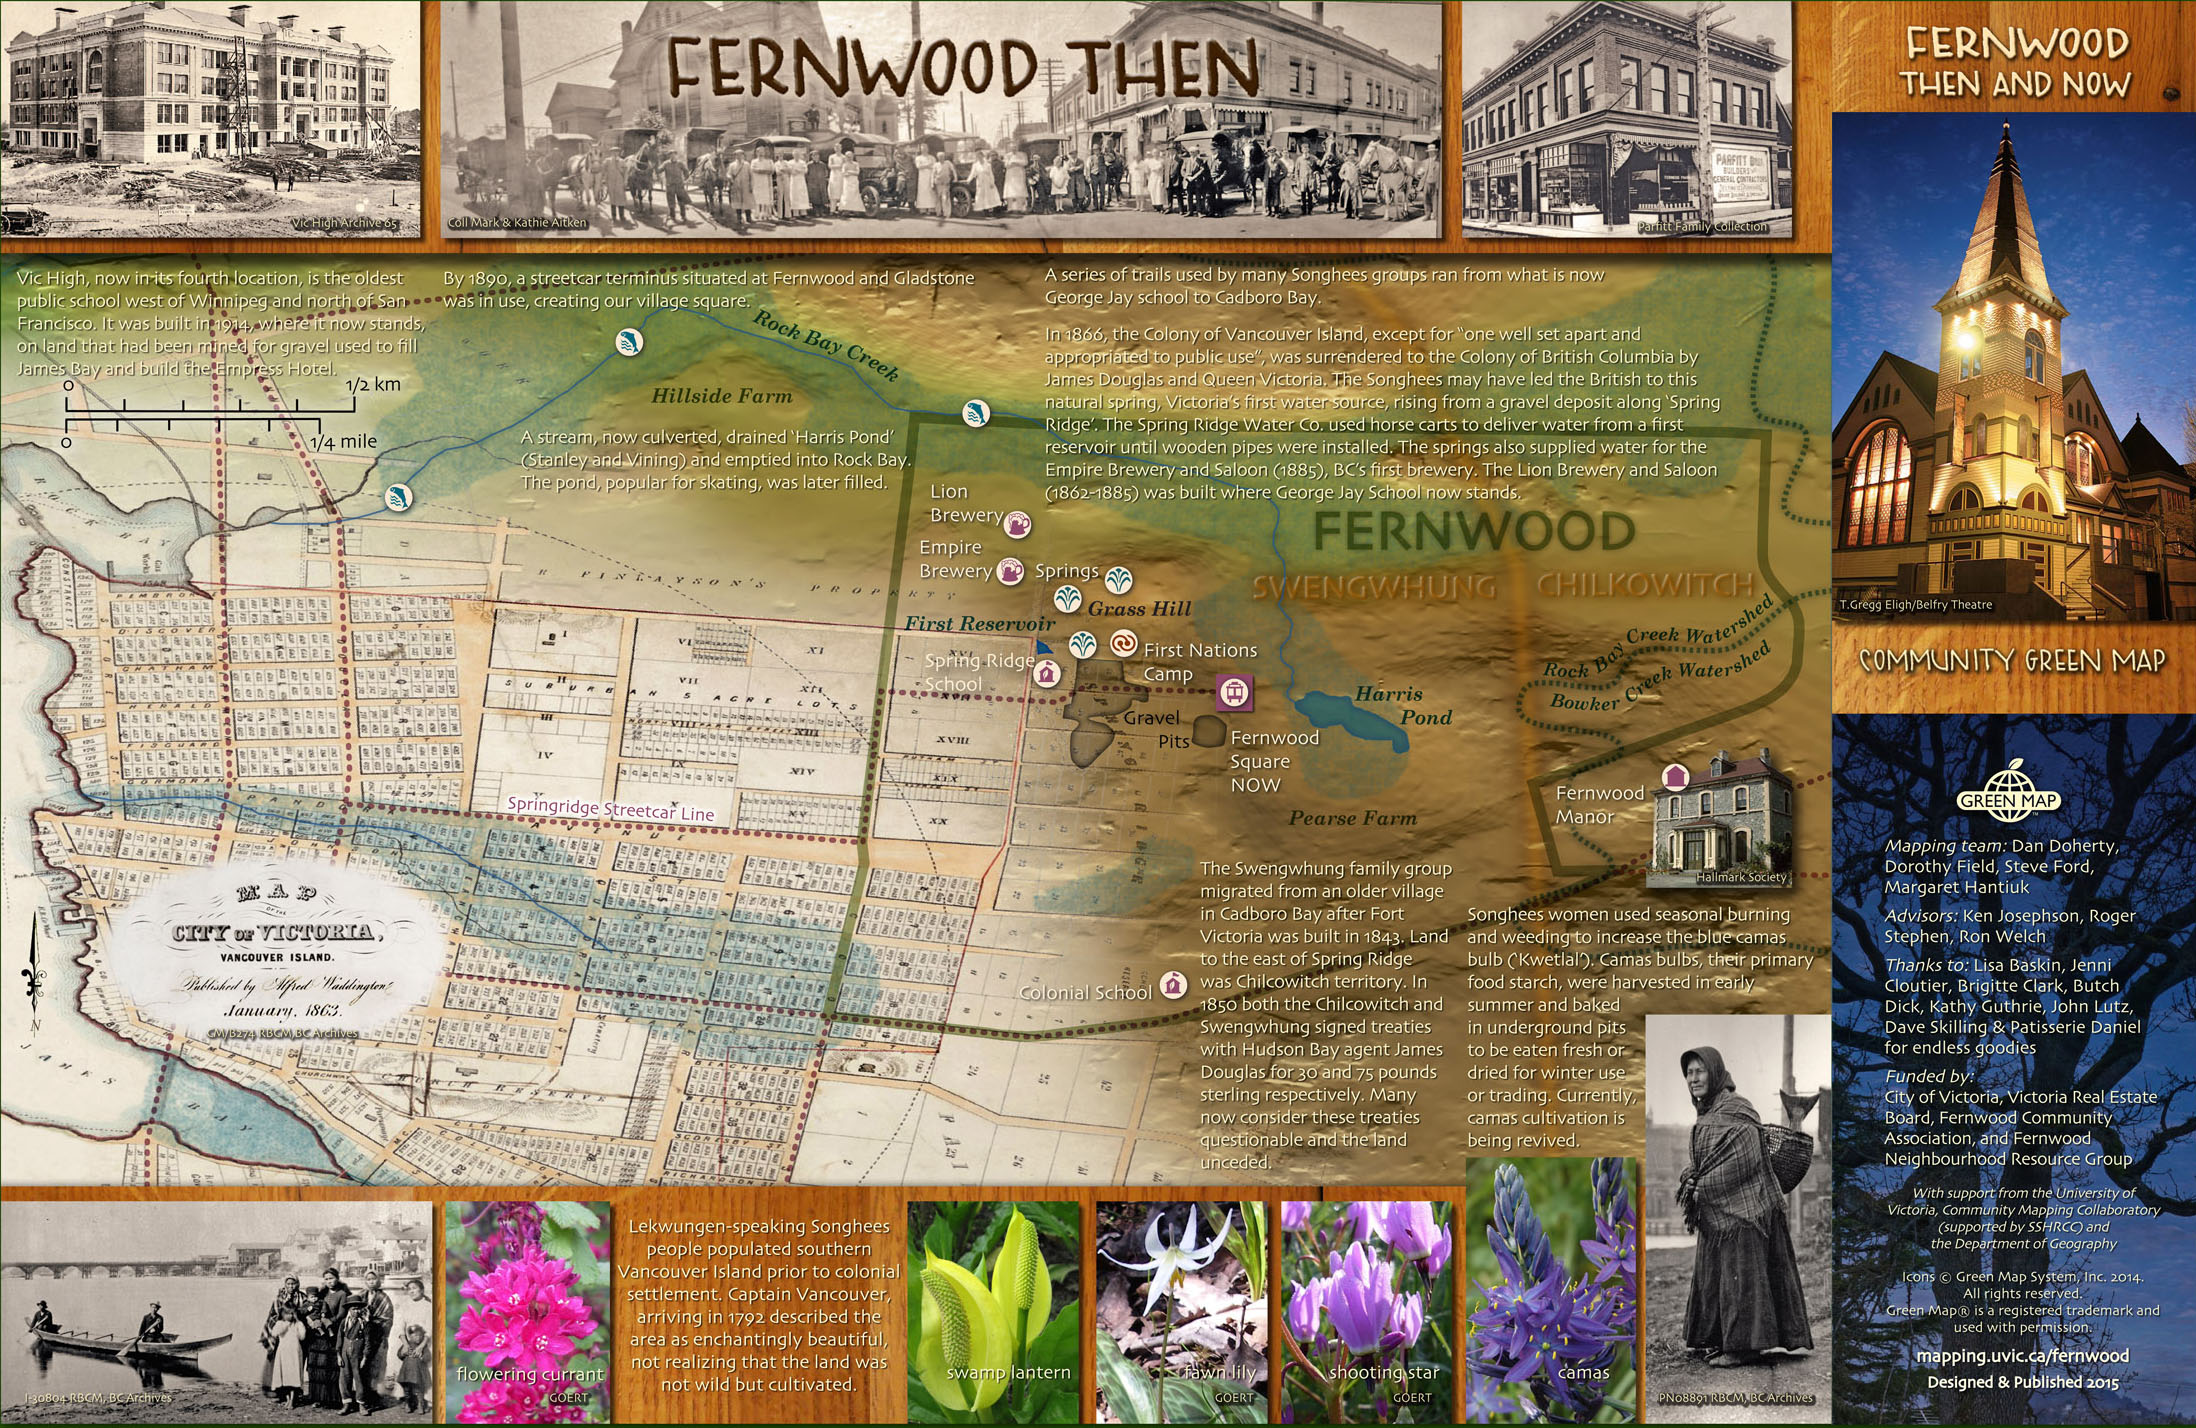 The Fernwood neighbourhood community green map then side